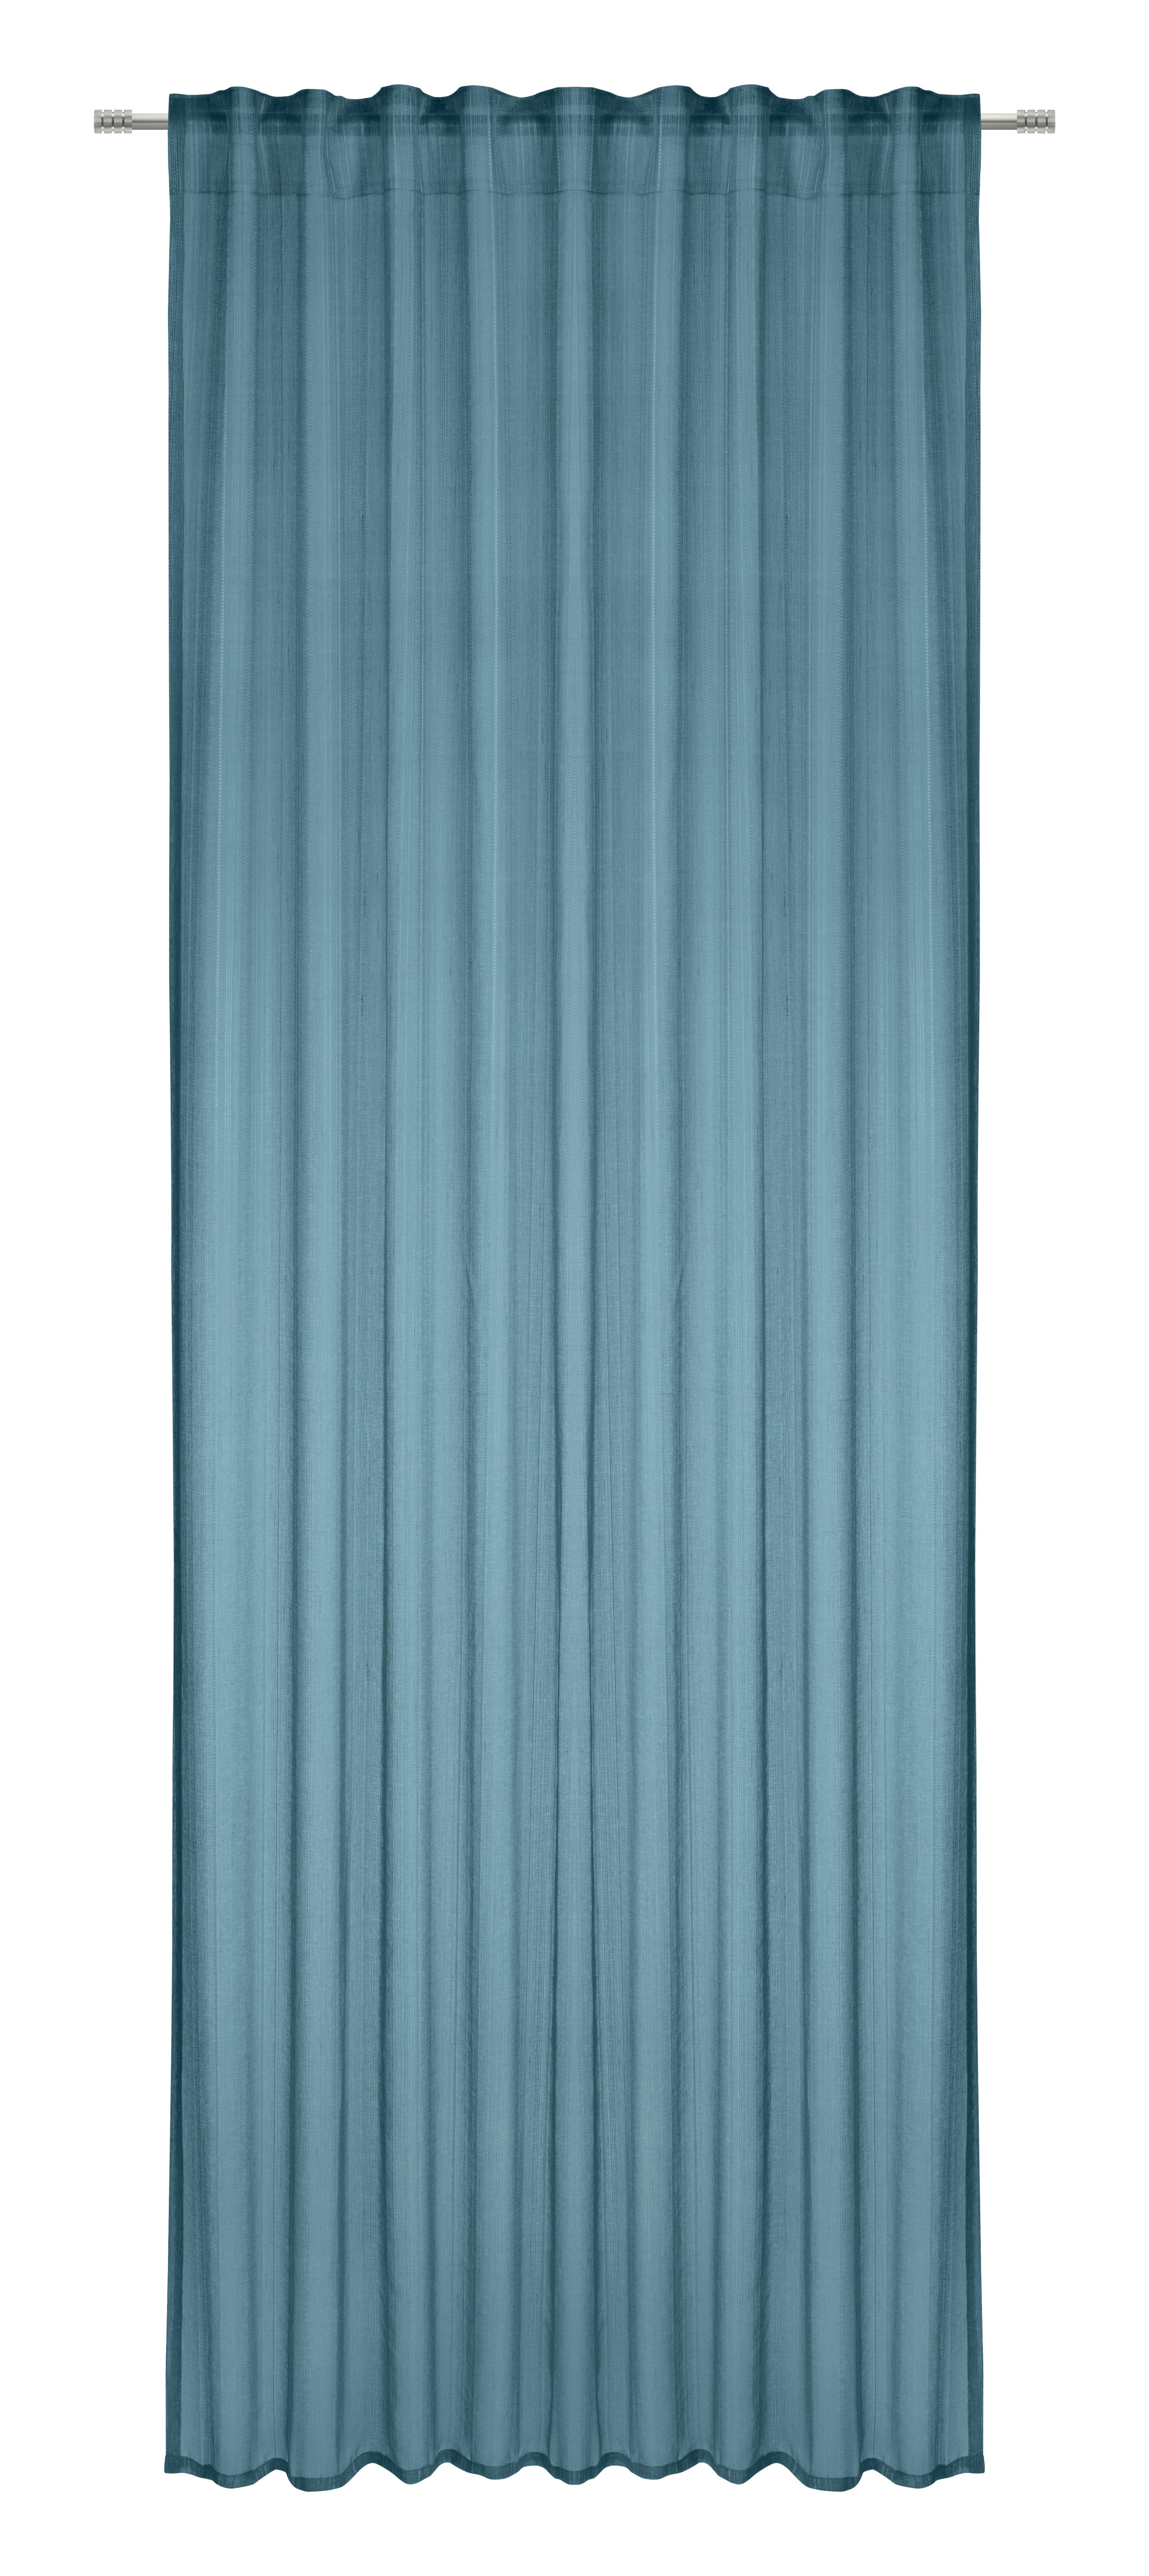 Gotova Zavjesa  135/245 Cm Sandy - boje petroleja, Modern, tekstil (135/245cm) - Modern Living